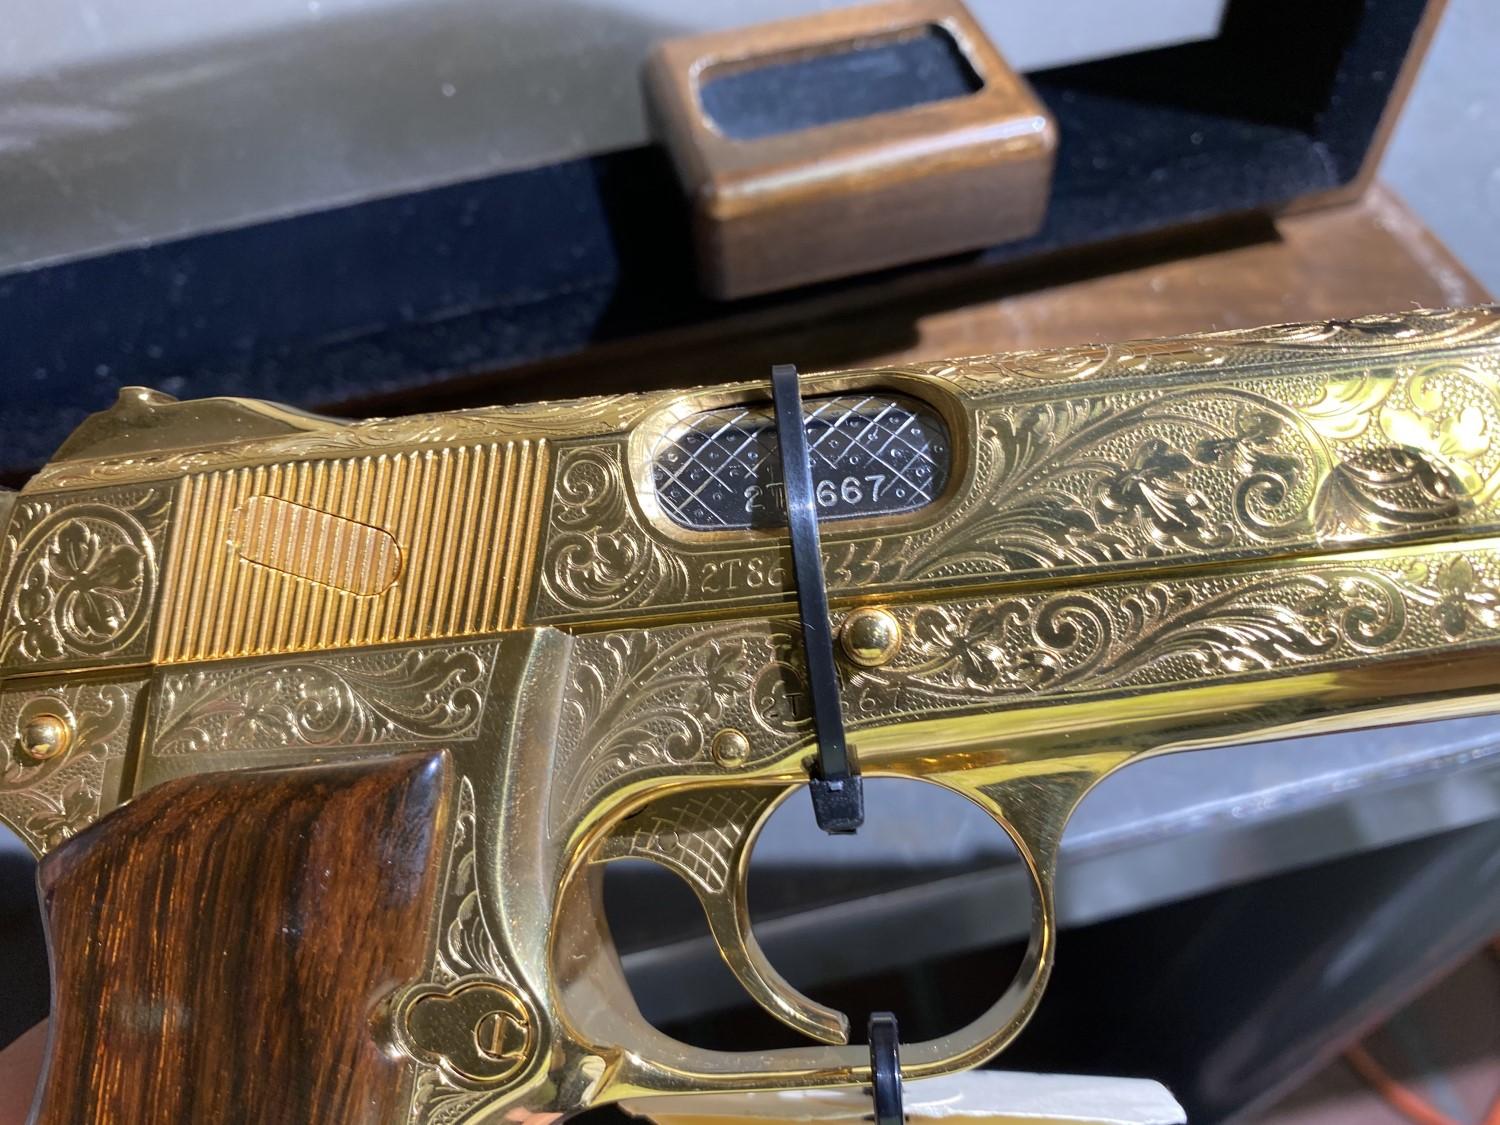 Golden Englis Brown High Power Pistol in case